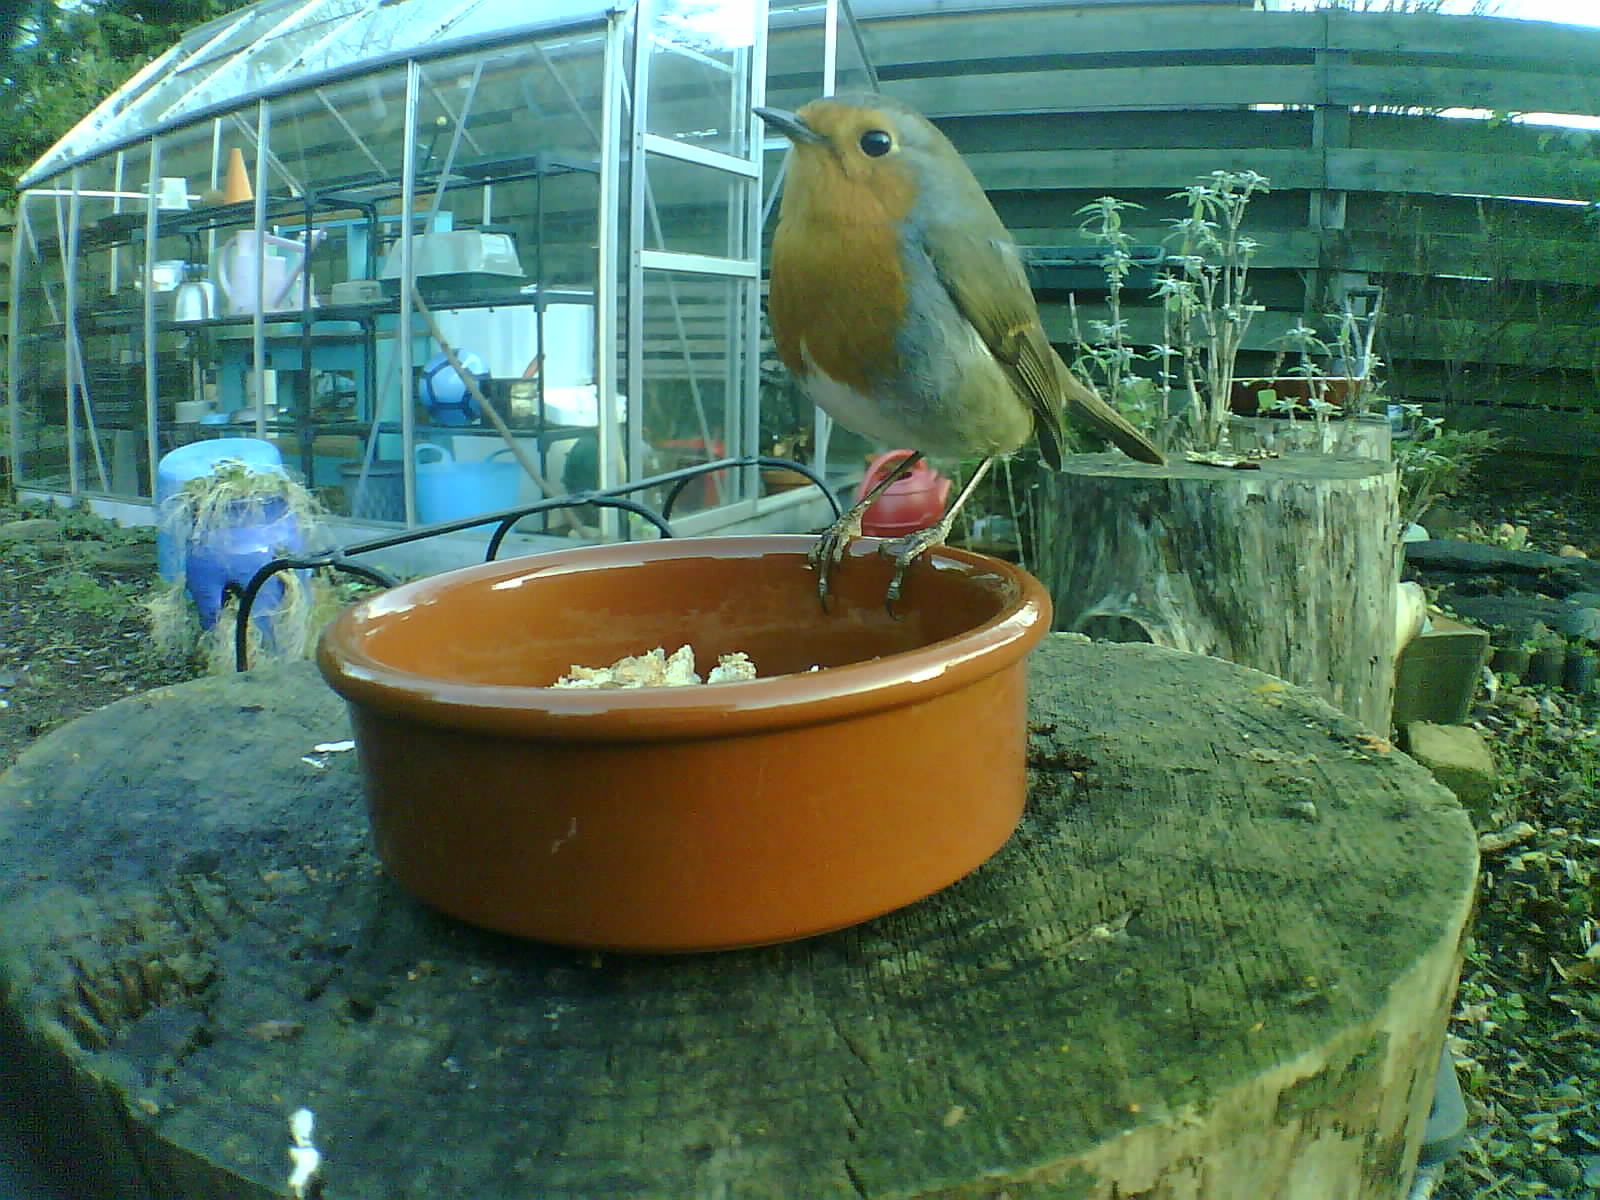 Robin sat on the edge of a feeder dish